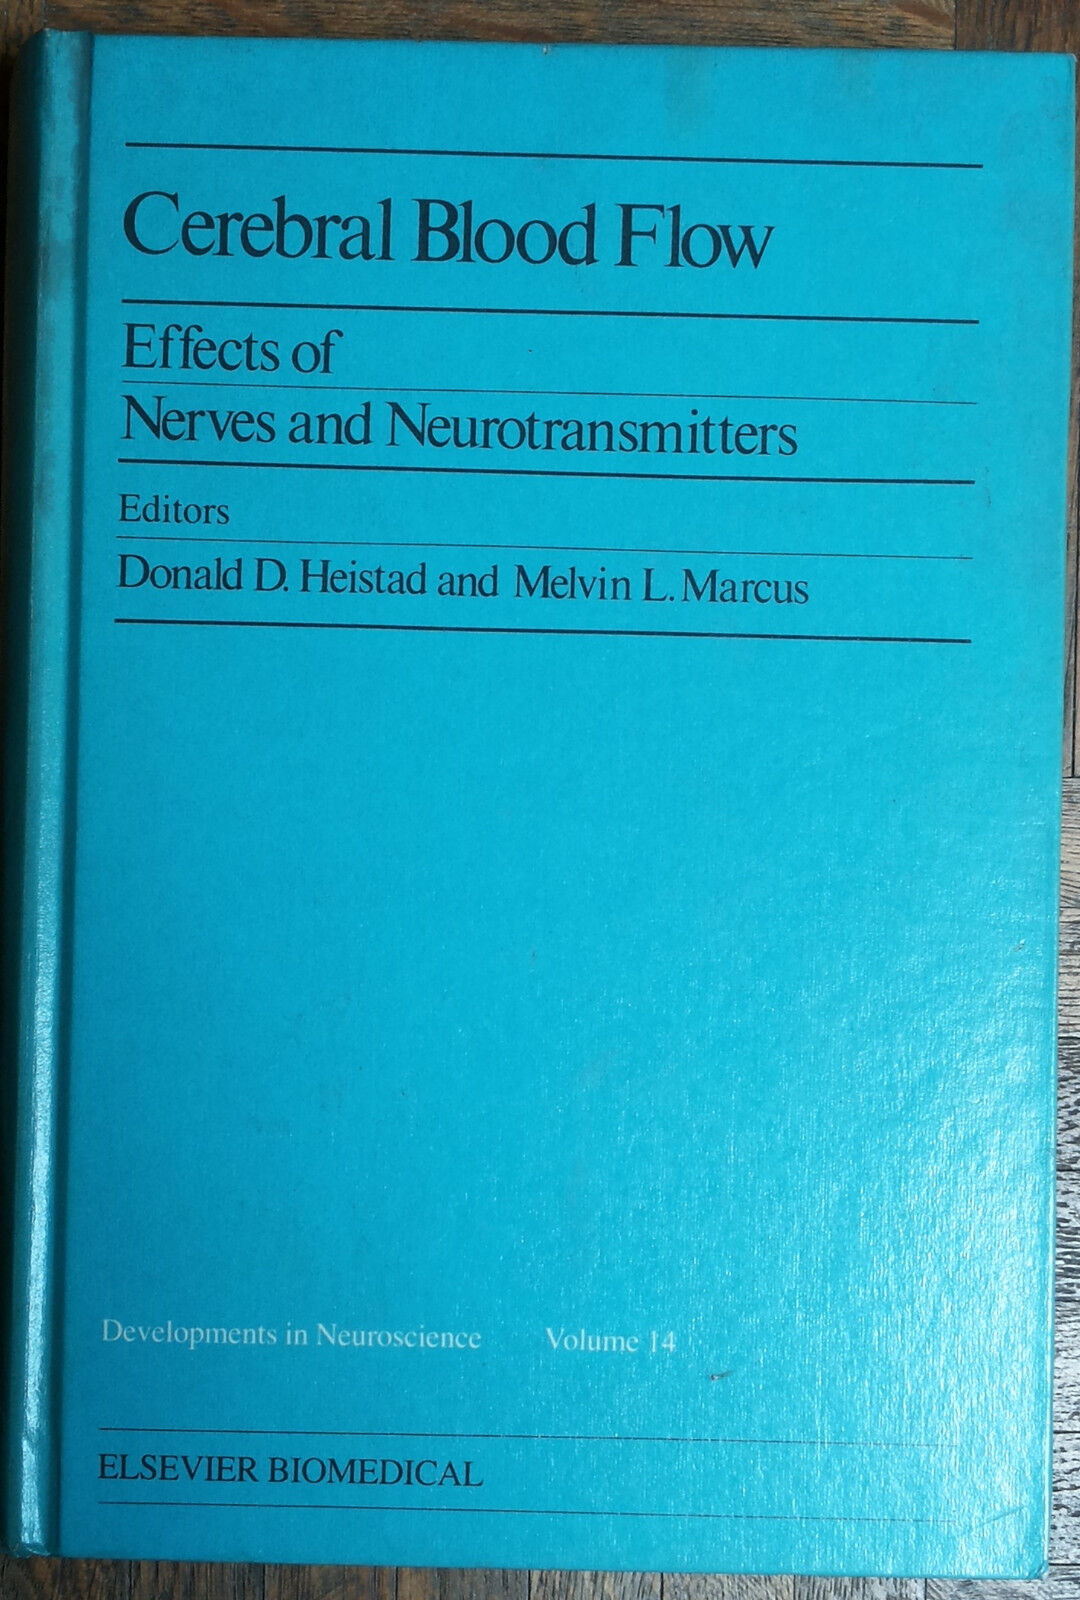 Cerebral blood flow - Heistad, Marcus - Elsevier/North-Holland,1982 - R